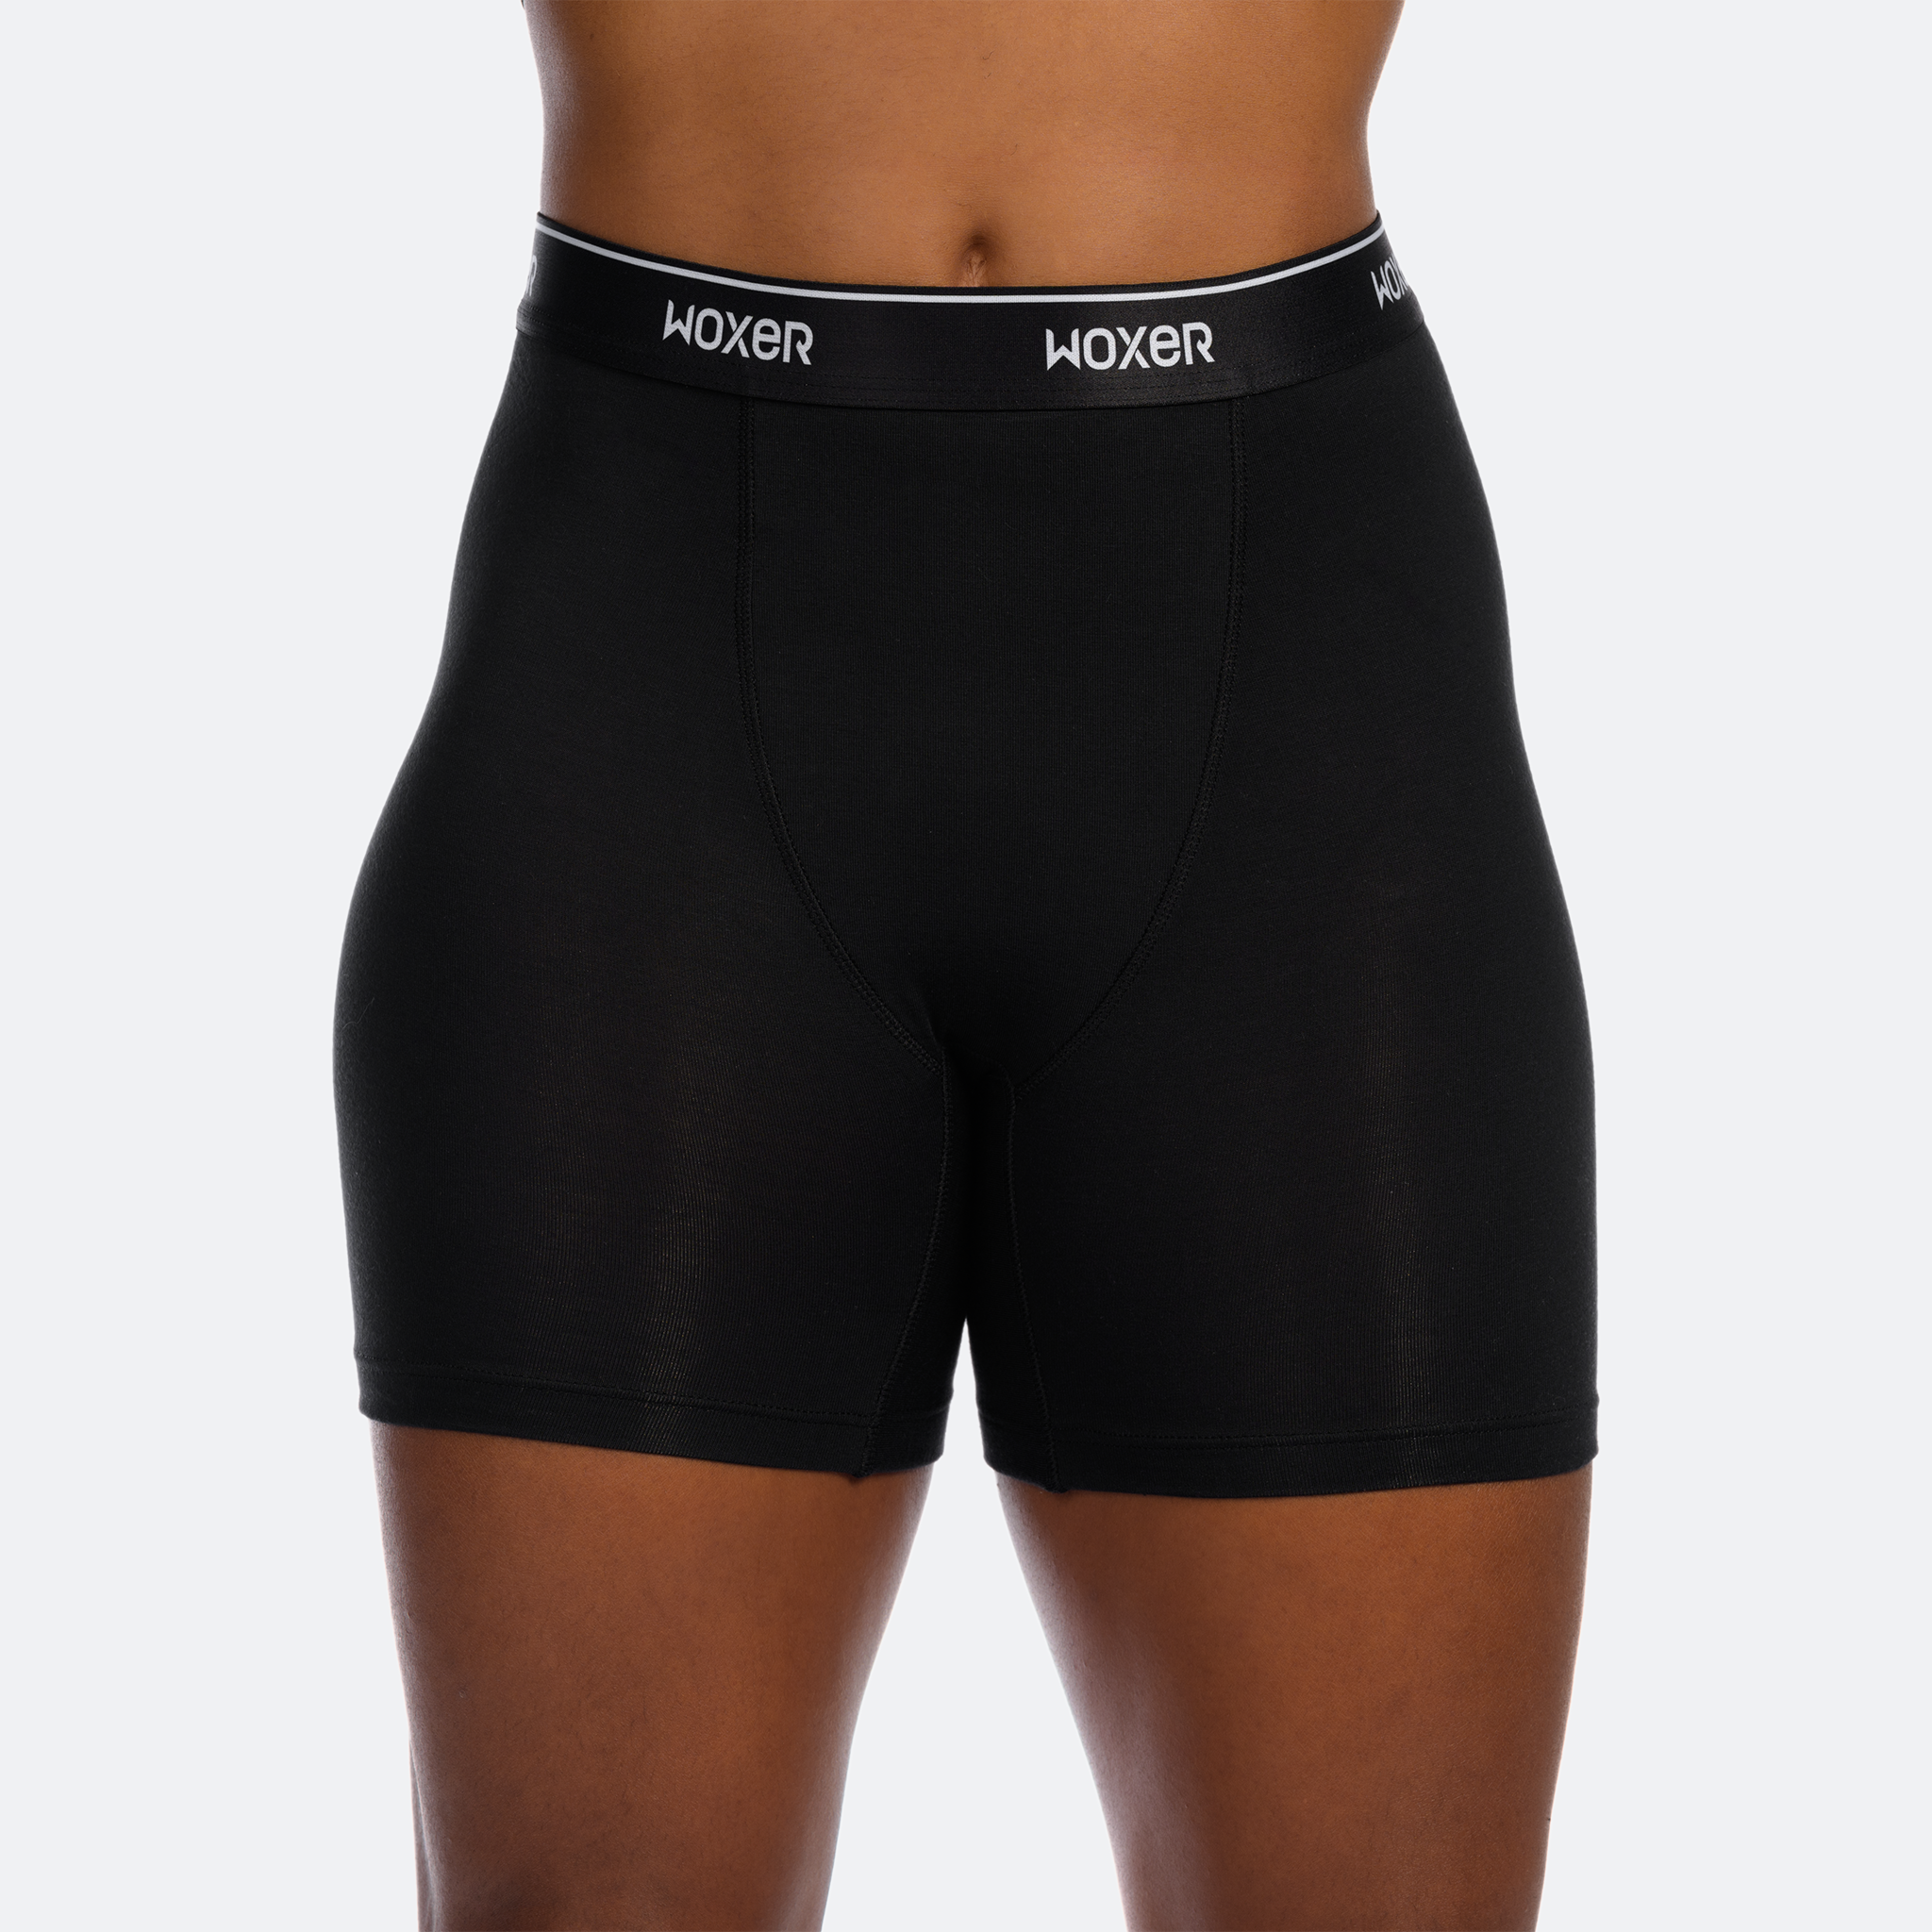 Woxer Women’s Boxer Briefs Underwear, Baller 5” High-Waisted Boyshorts  Panties Soft Anti-Chafing, No Roll Inseam, Black 2.0, Small